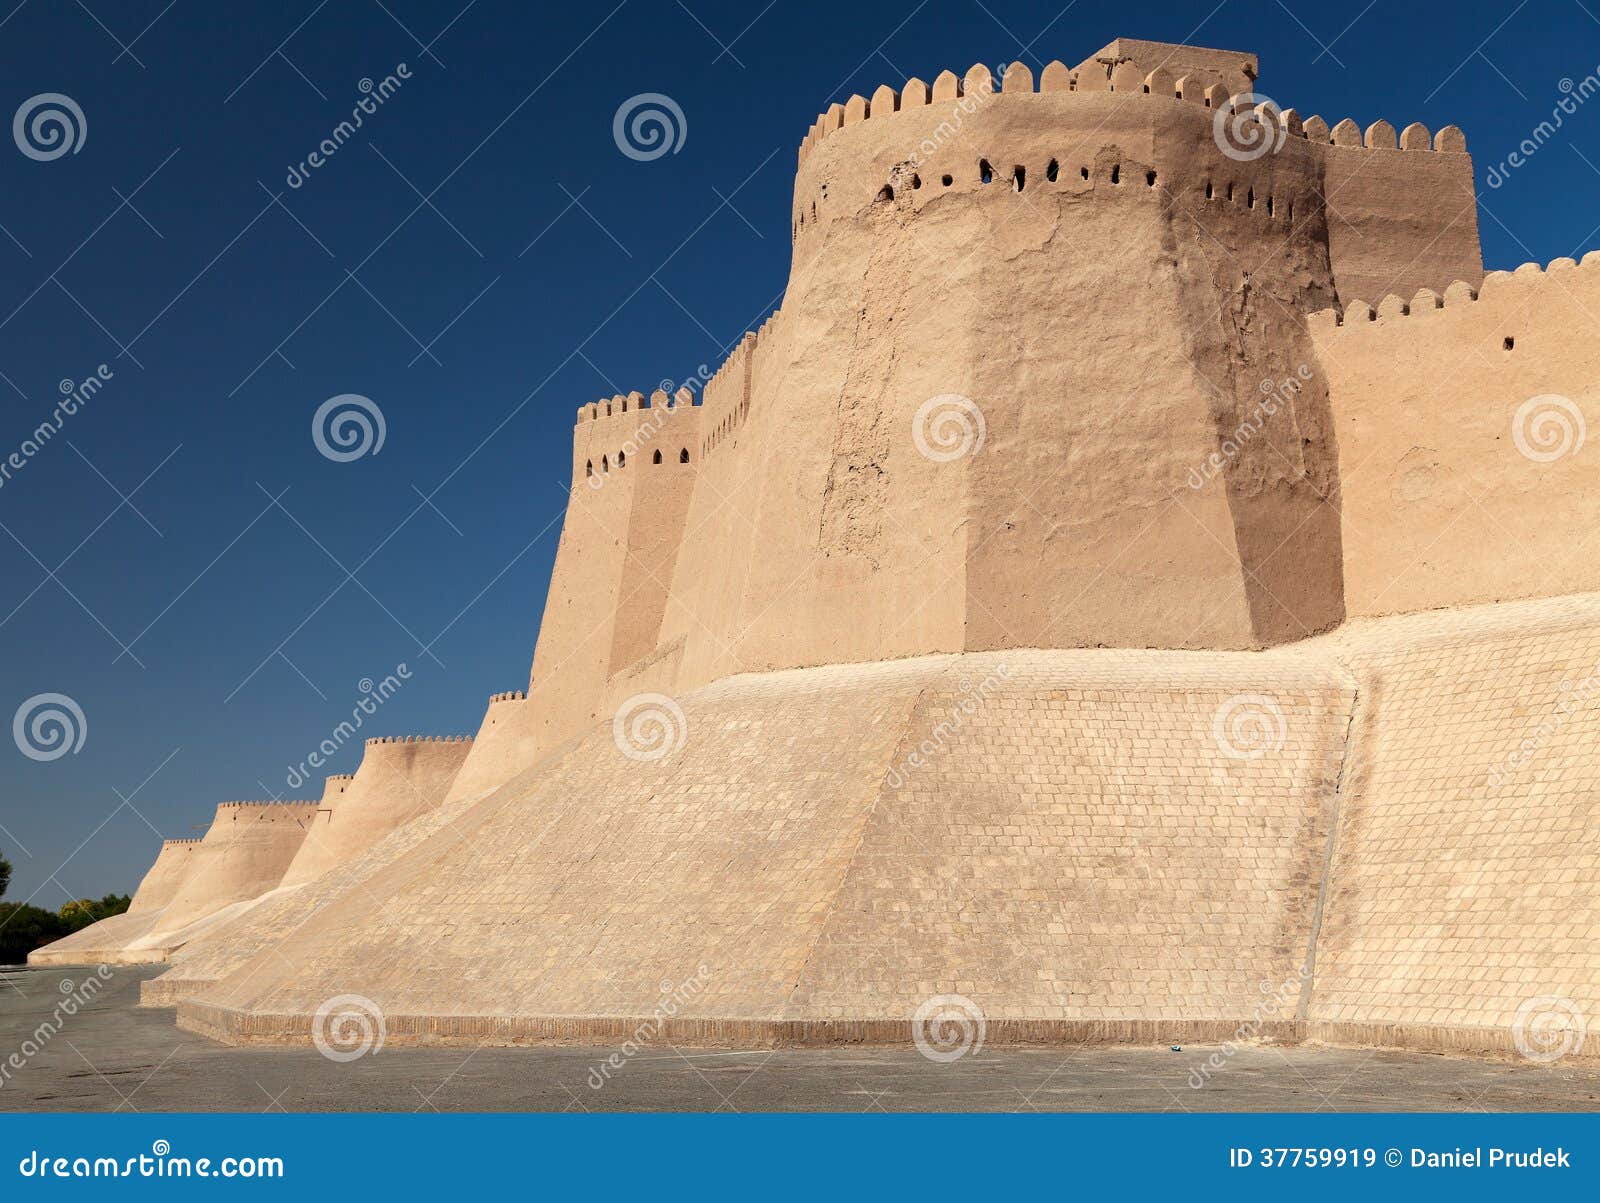 wall of itchan kala - khiva - xorazm province - uzbekistan